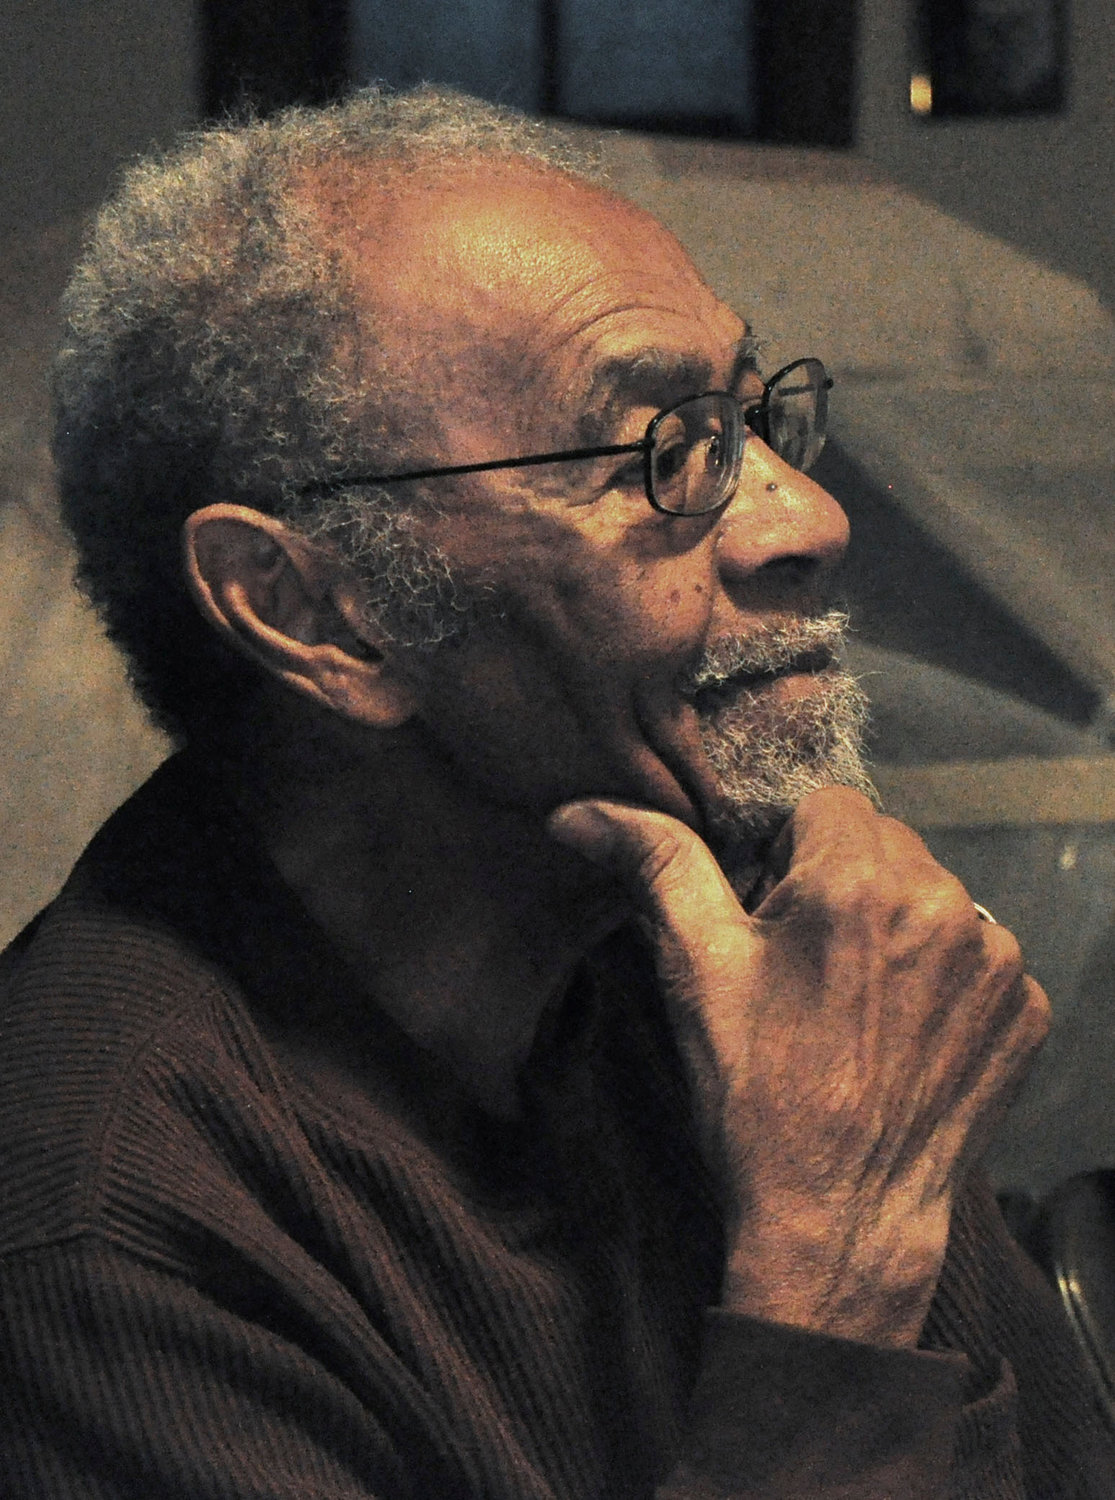 NMSU Professor Emeritus Clarence Fielder